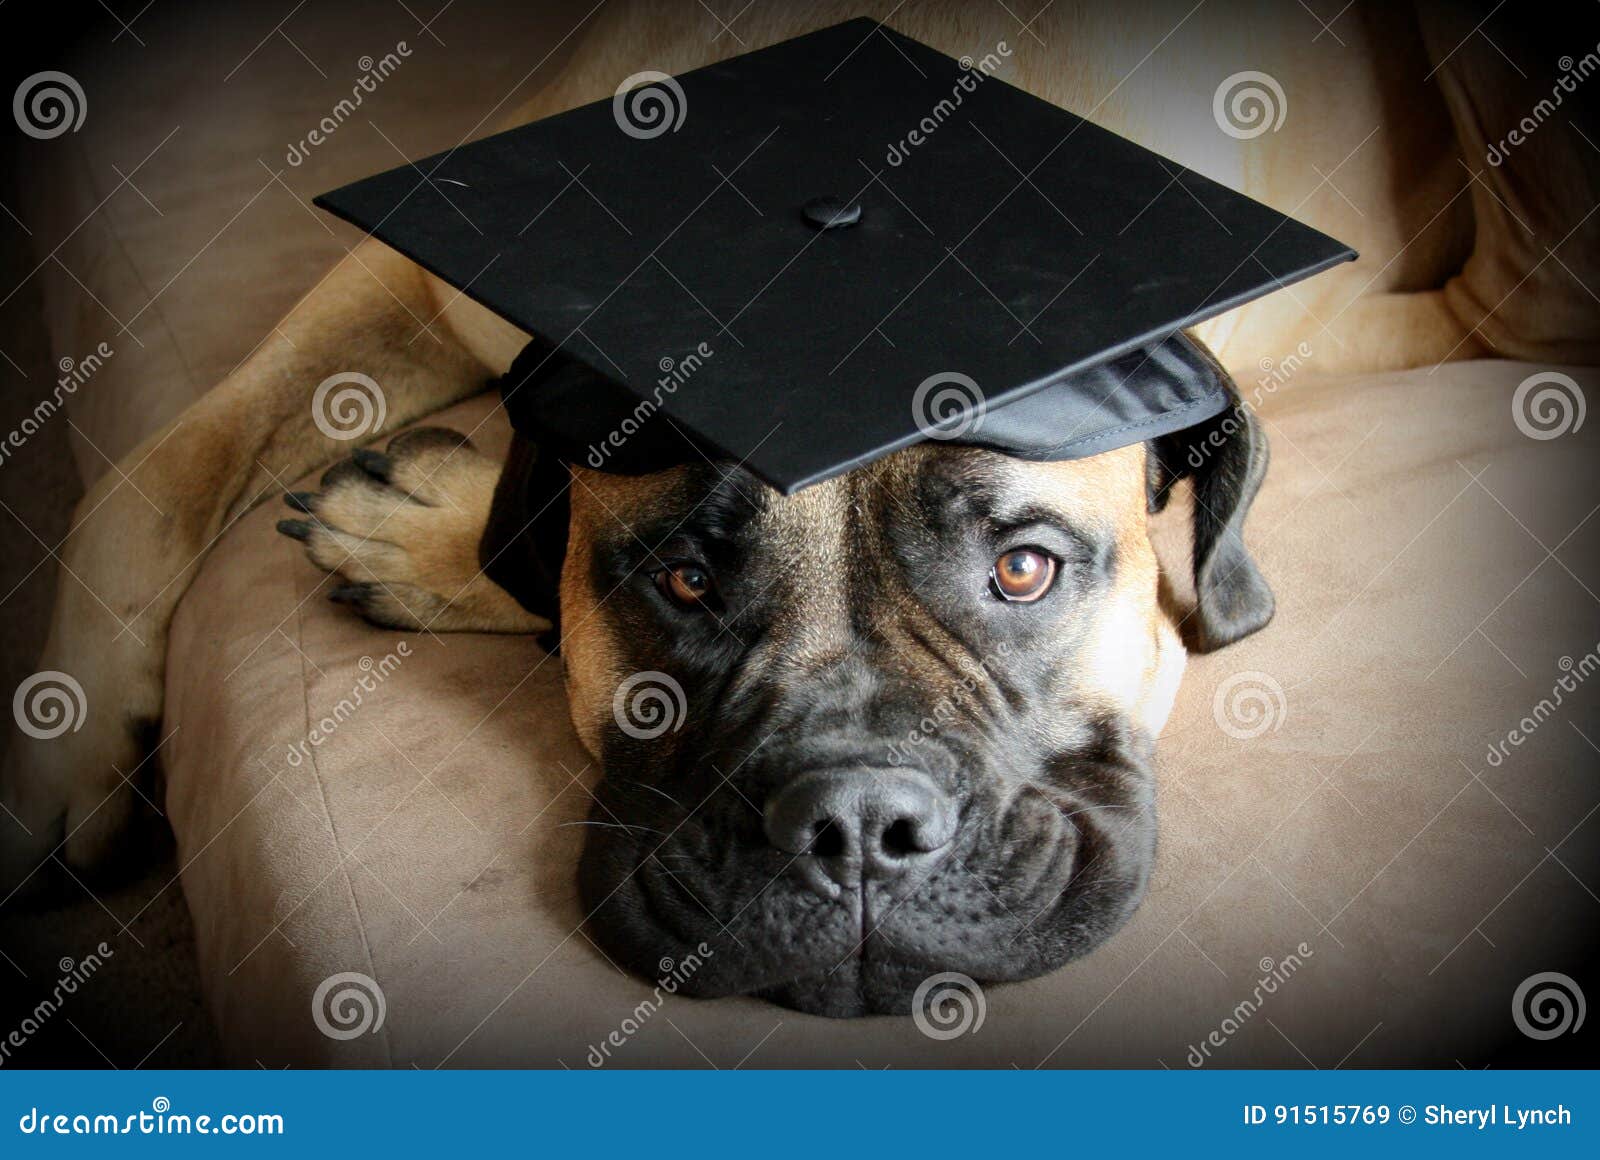 POPETPOP Pet Graduation Cap - Dog Graduation Hats with Yellow Tassel for  Dogs Cats Graduation Costume Party Favor (Black) : Amazon.in: Pet Supplies